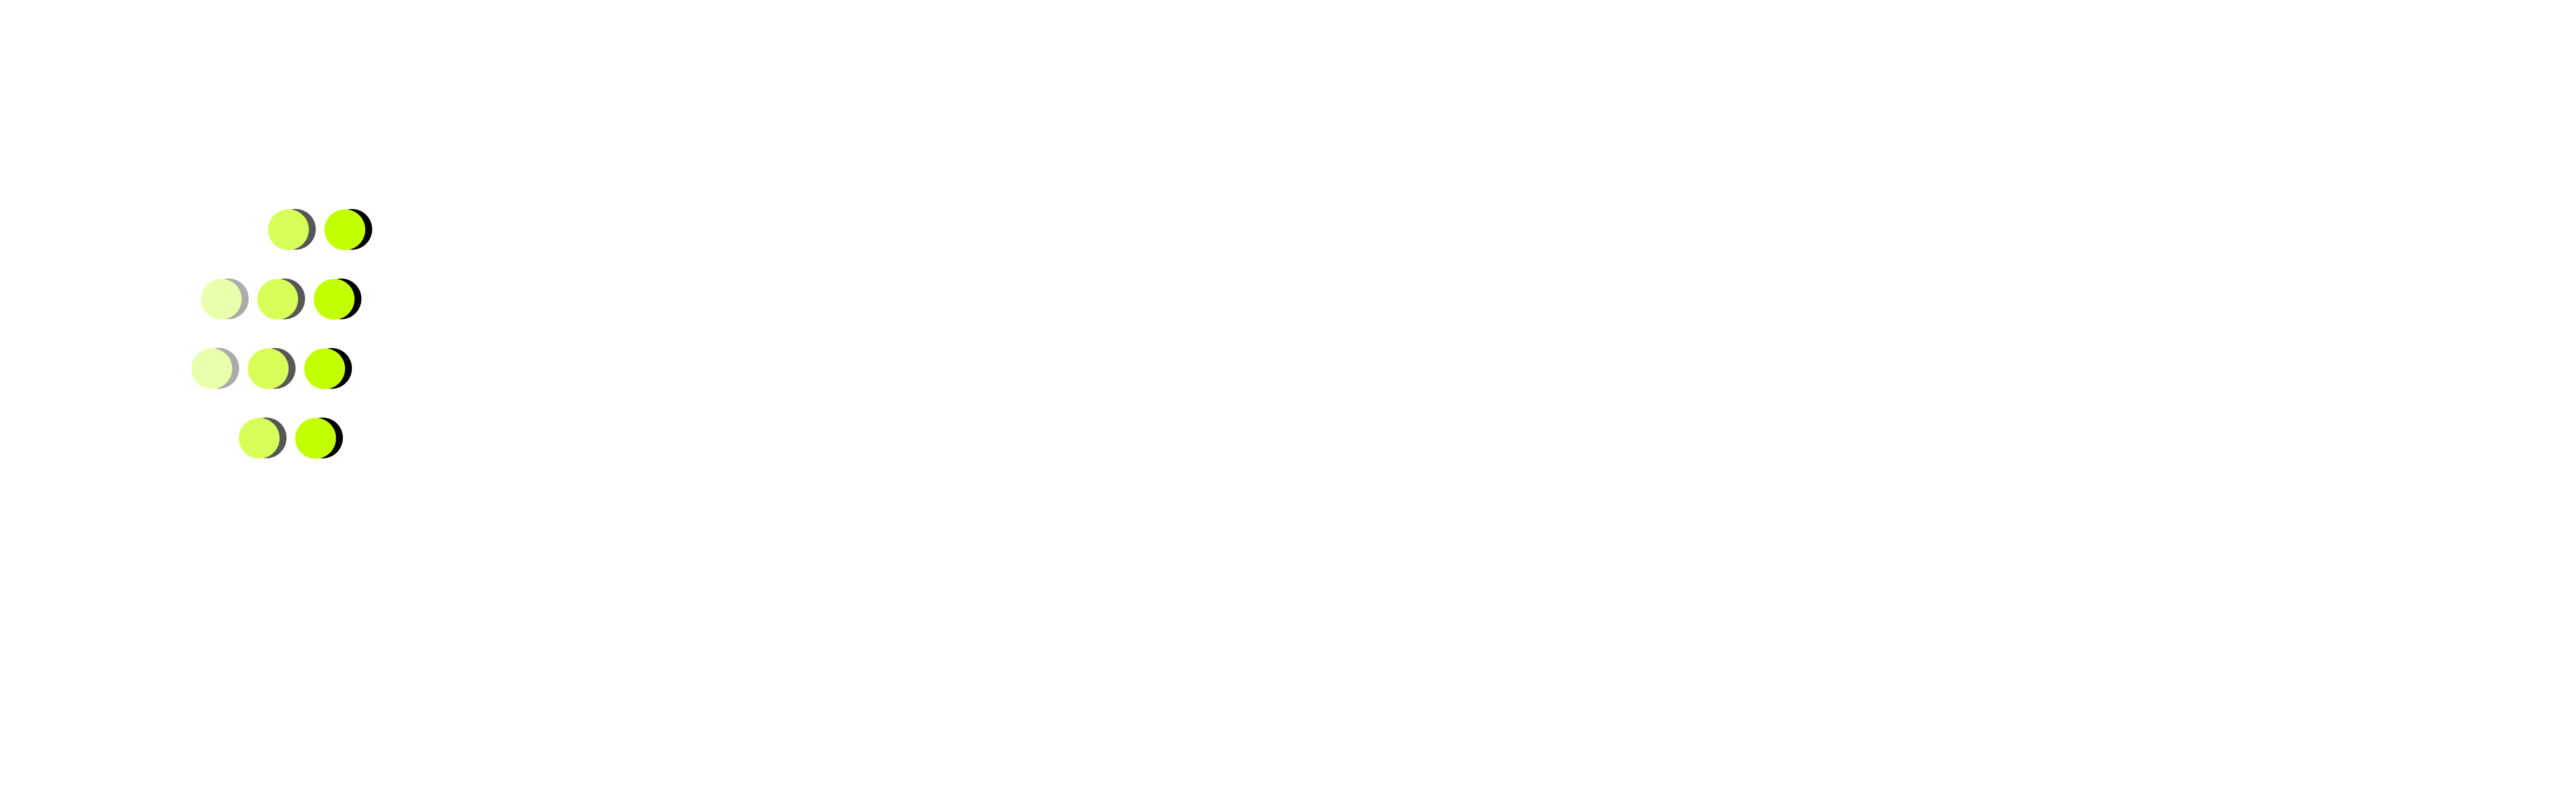 InterPadel Narvik logo web